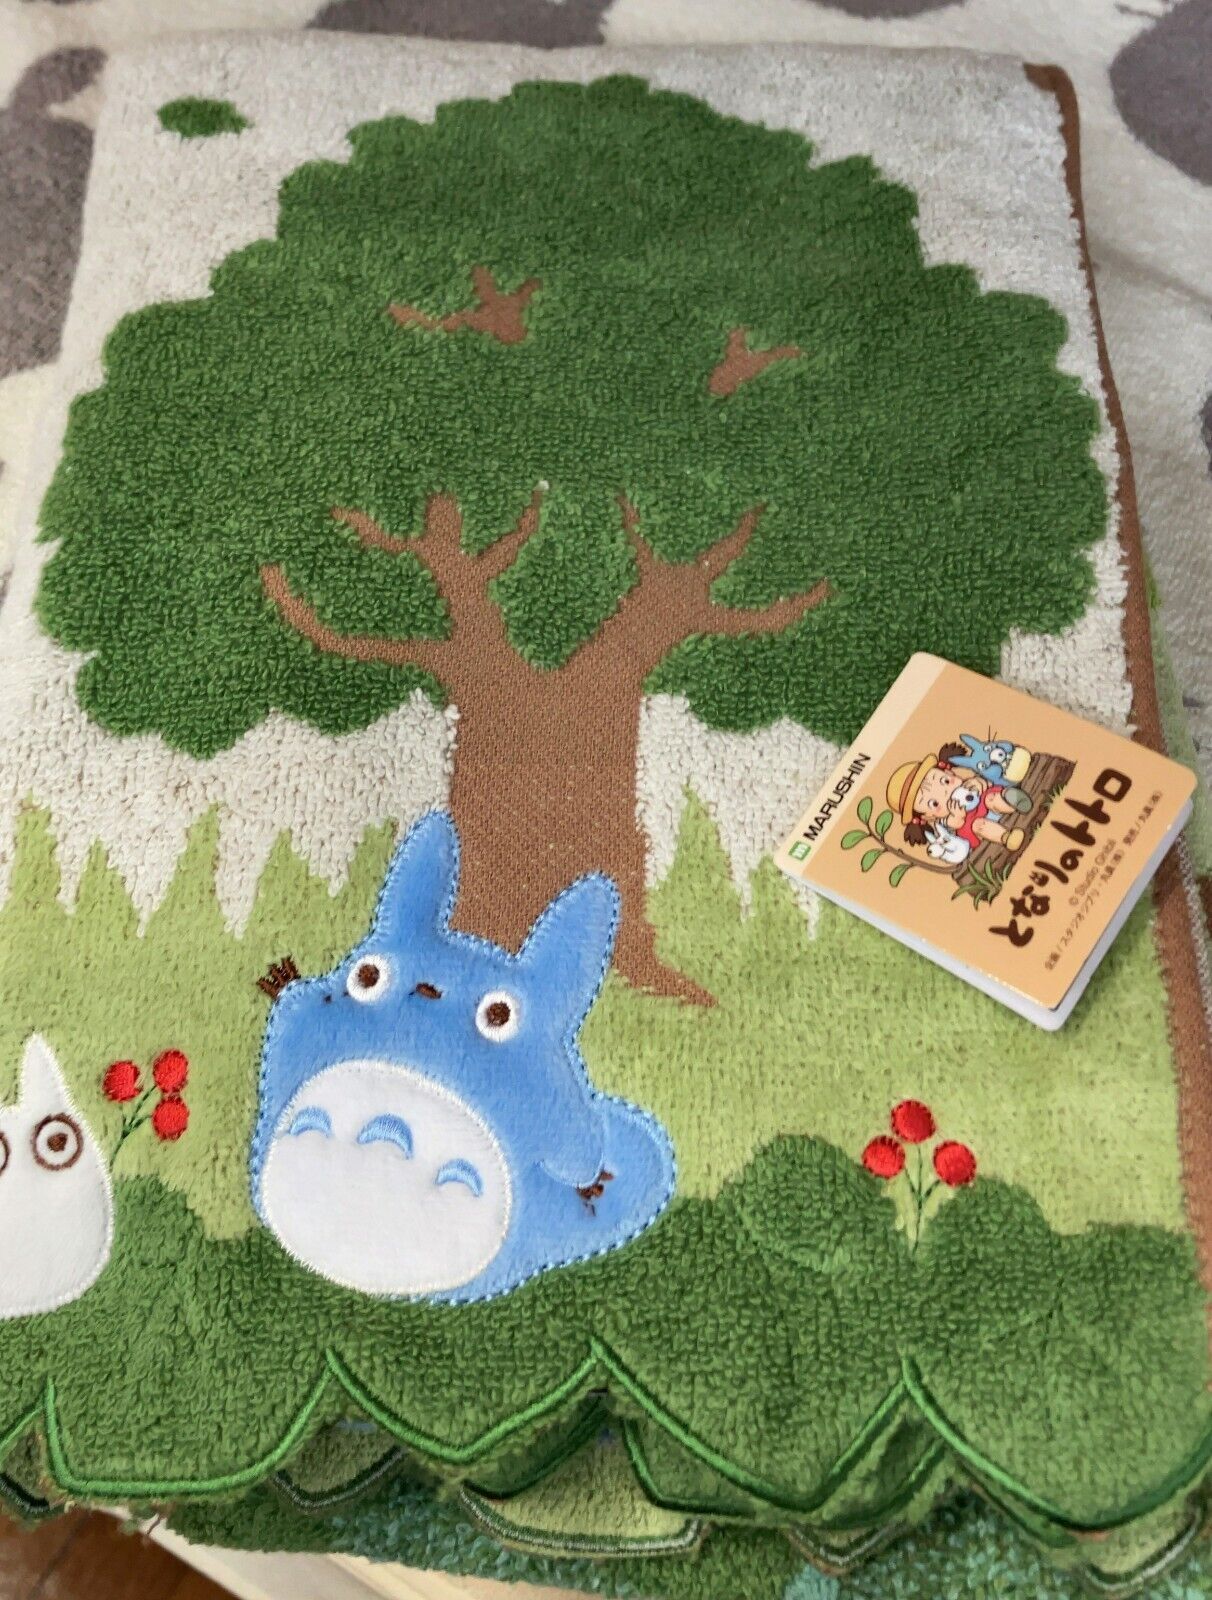 My Neighbor Totoro Bath Towel (Walk in the Sky) 60x120cm Studio Ghibli New Japan